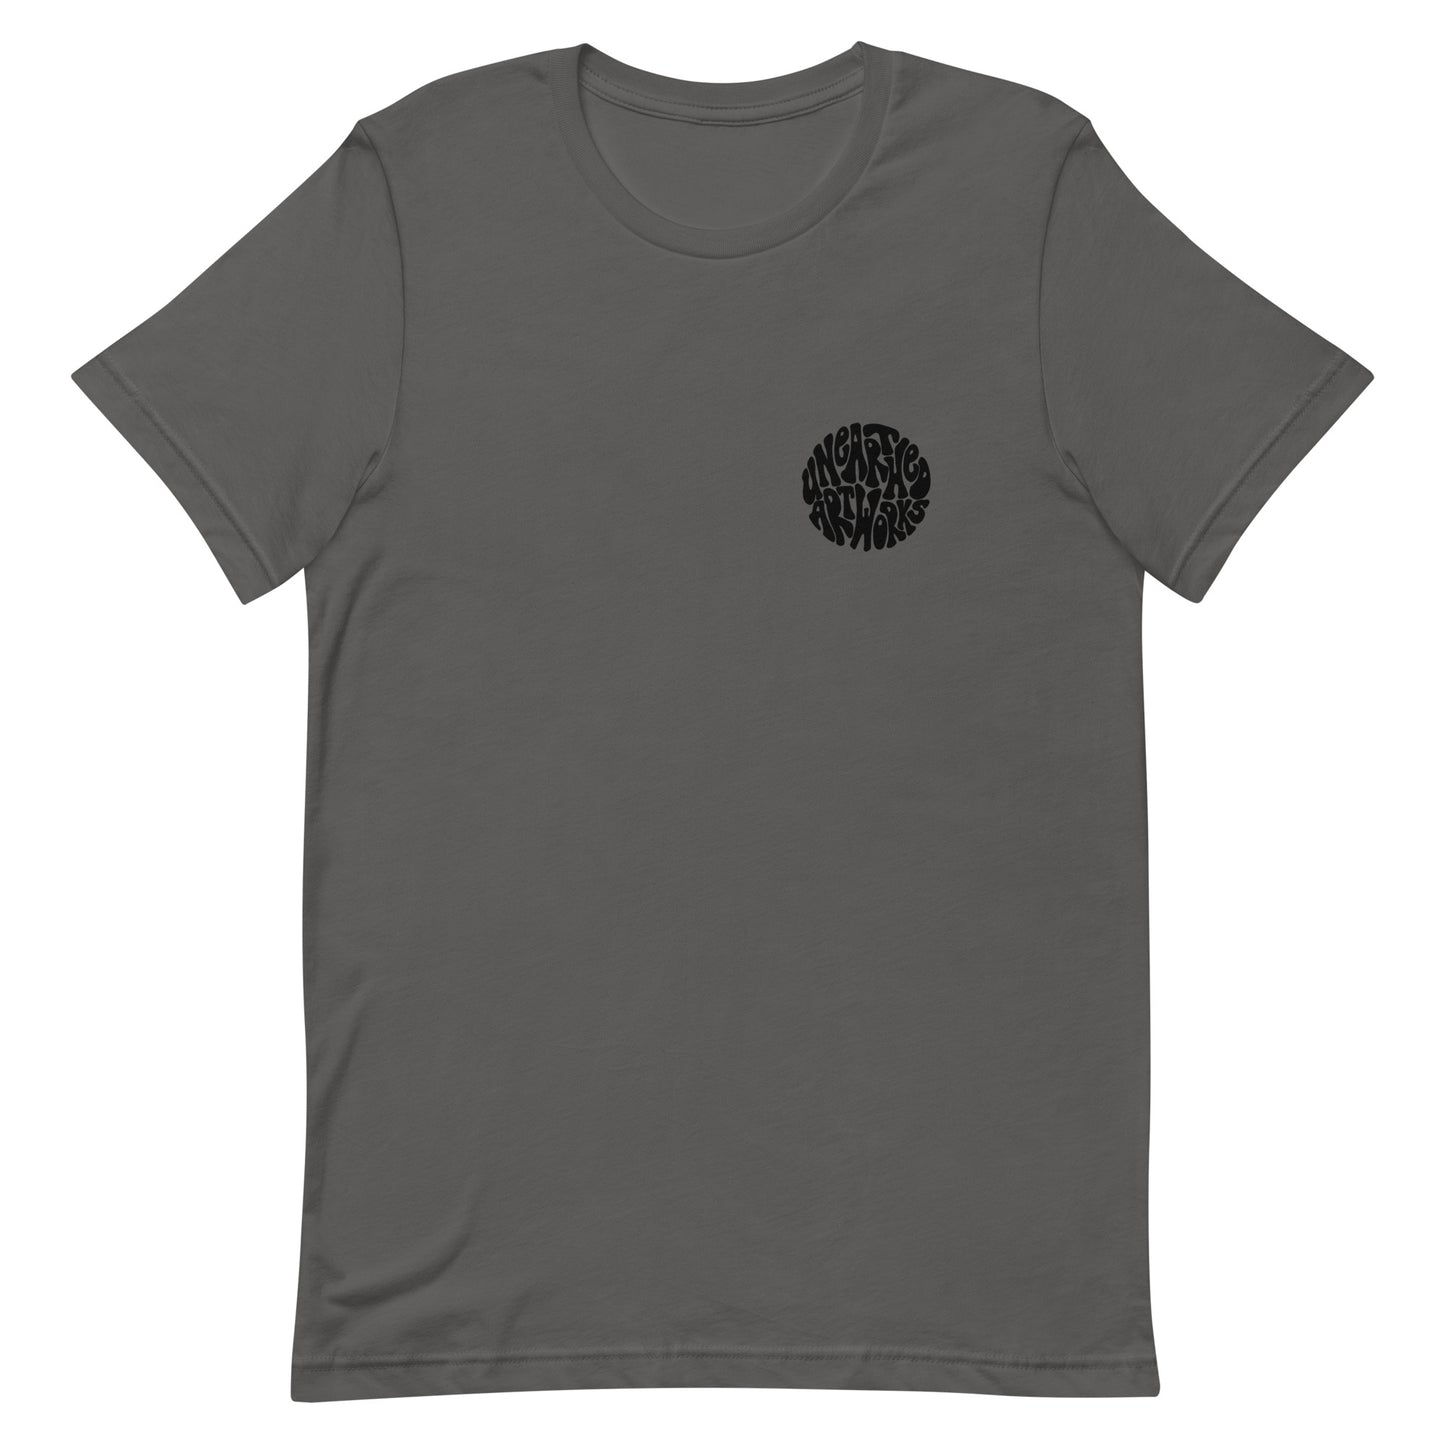 spread good vibes t-shirt (design on back)